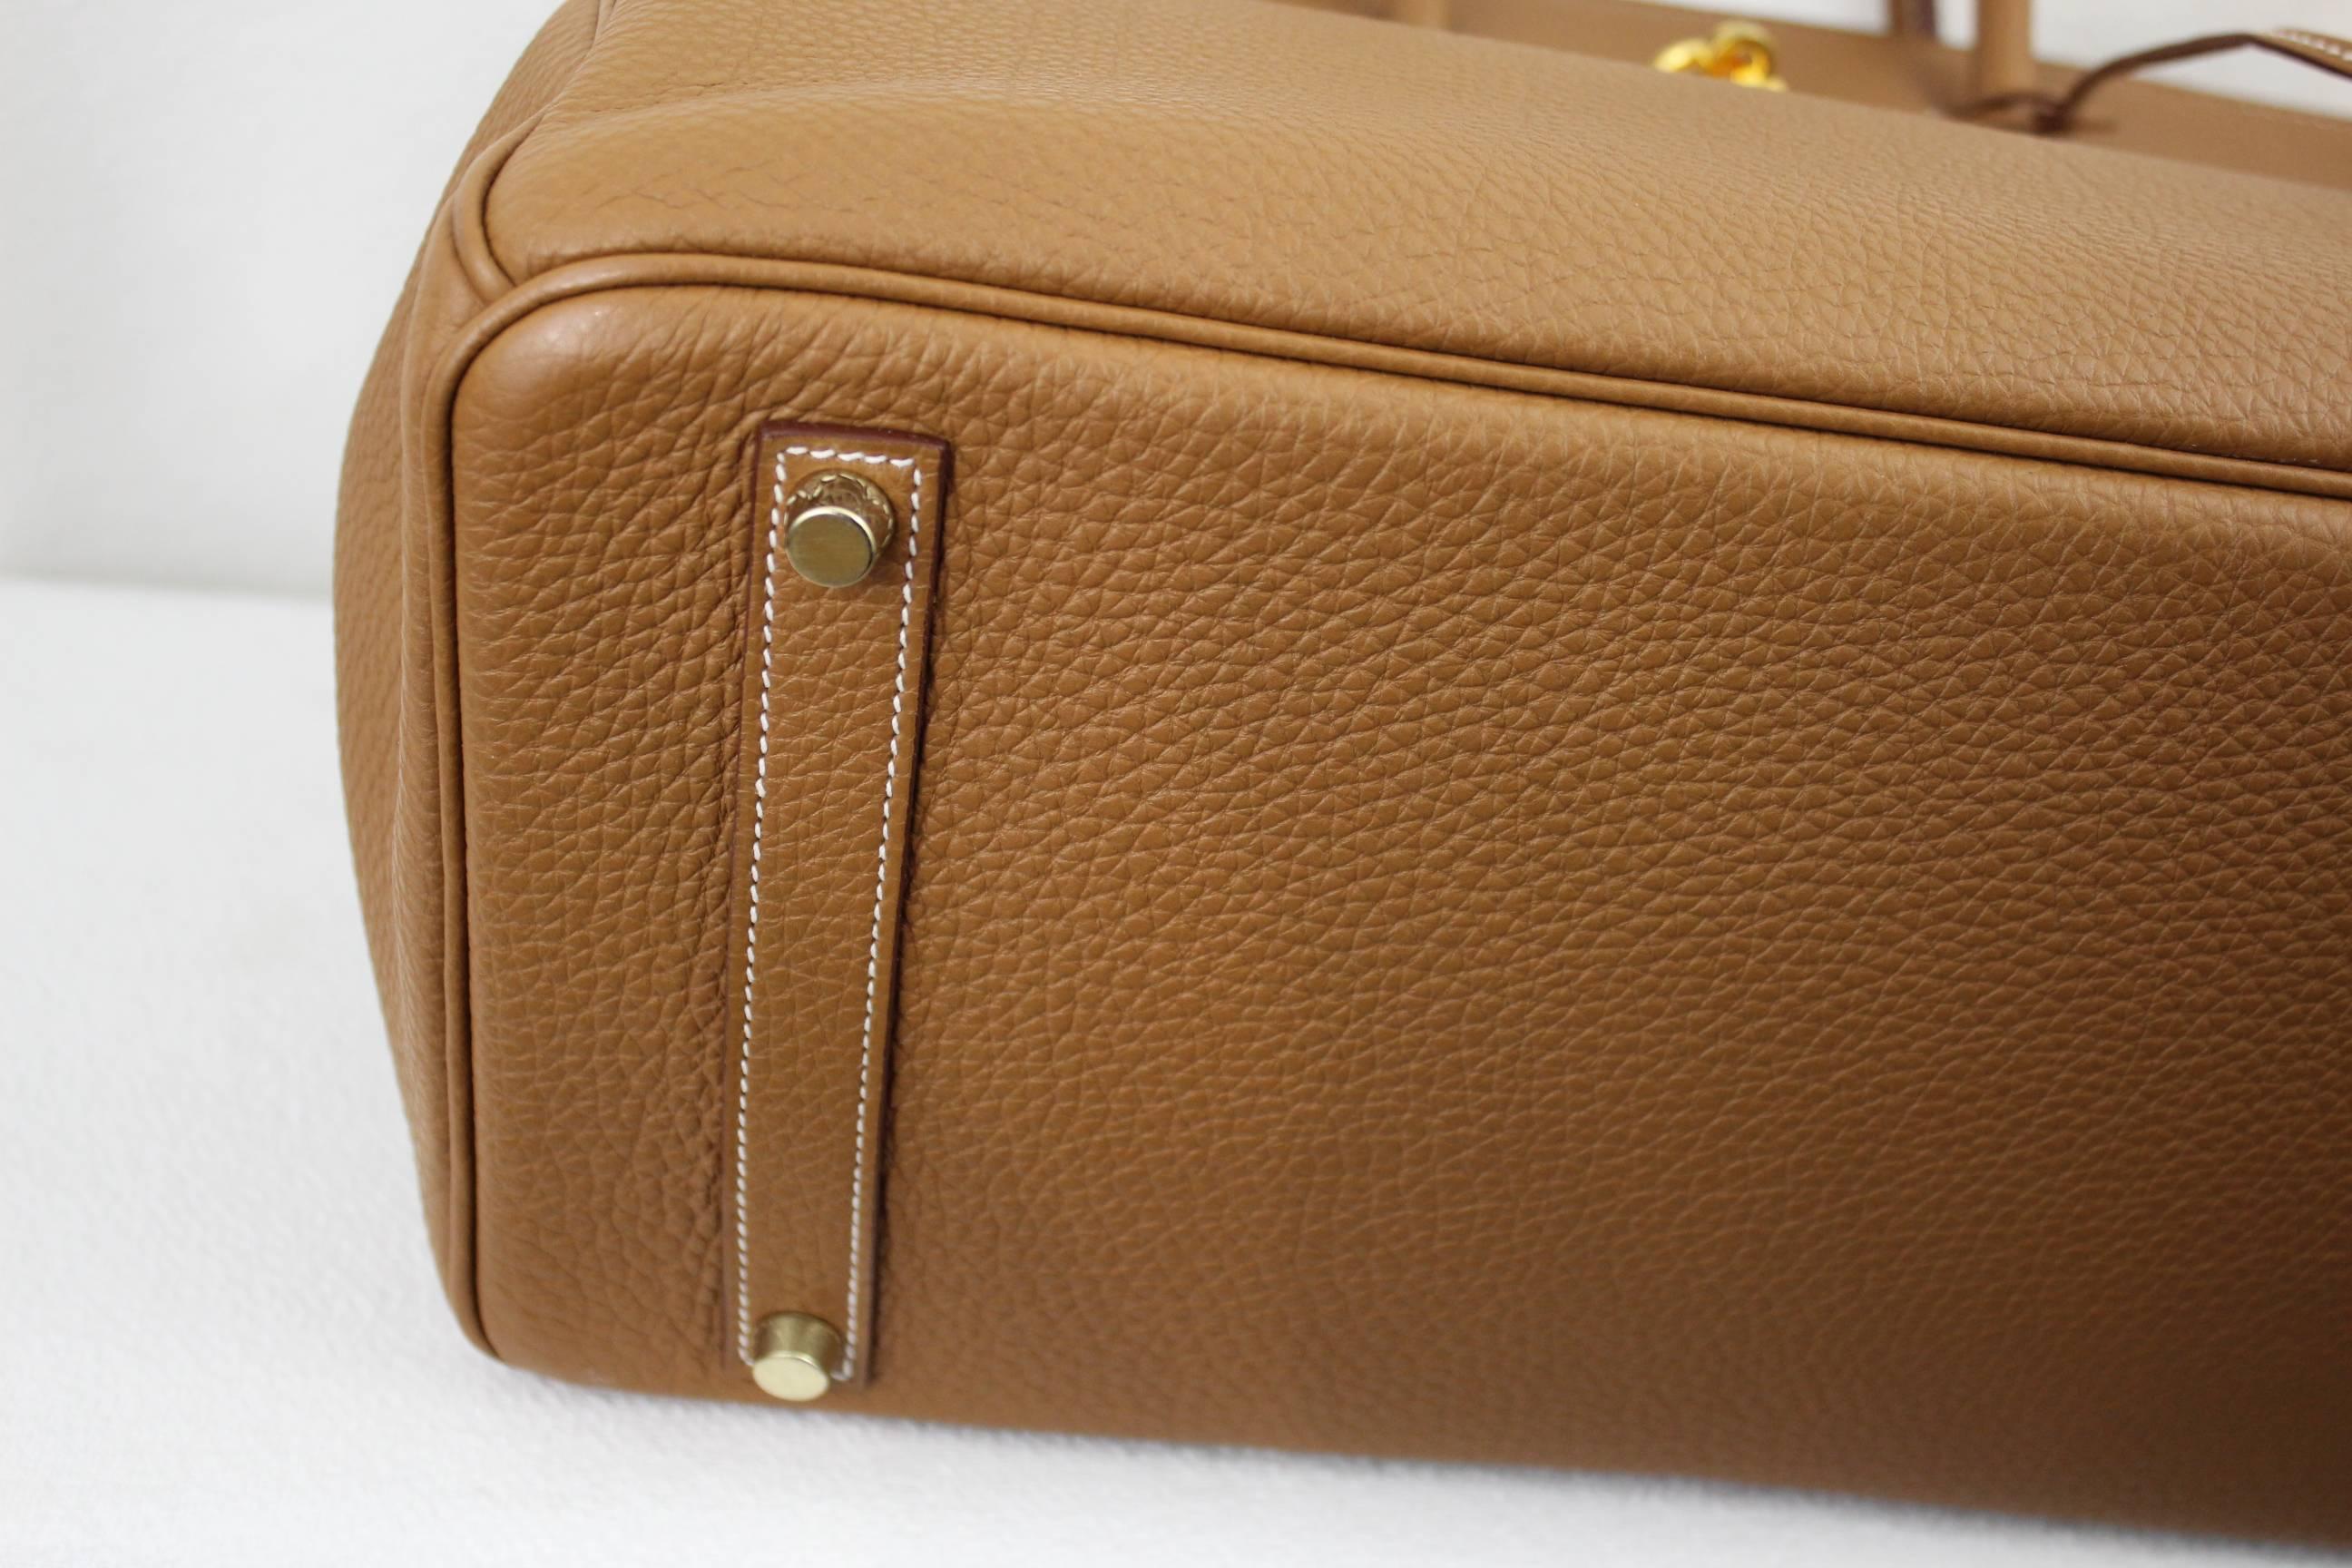 Gorgeous 2009 Hermes Birkin 35 Gold Togo Bag with Golden Hardware 2